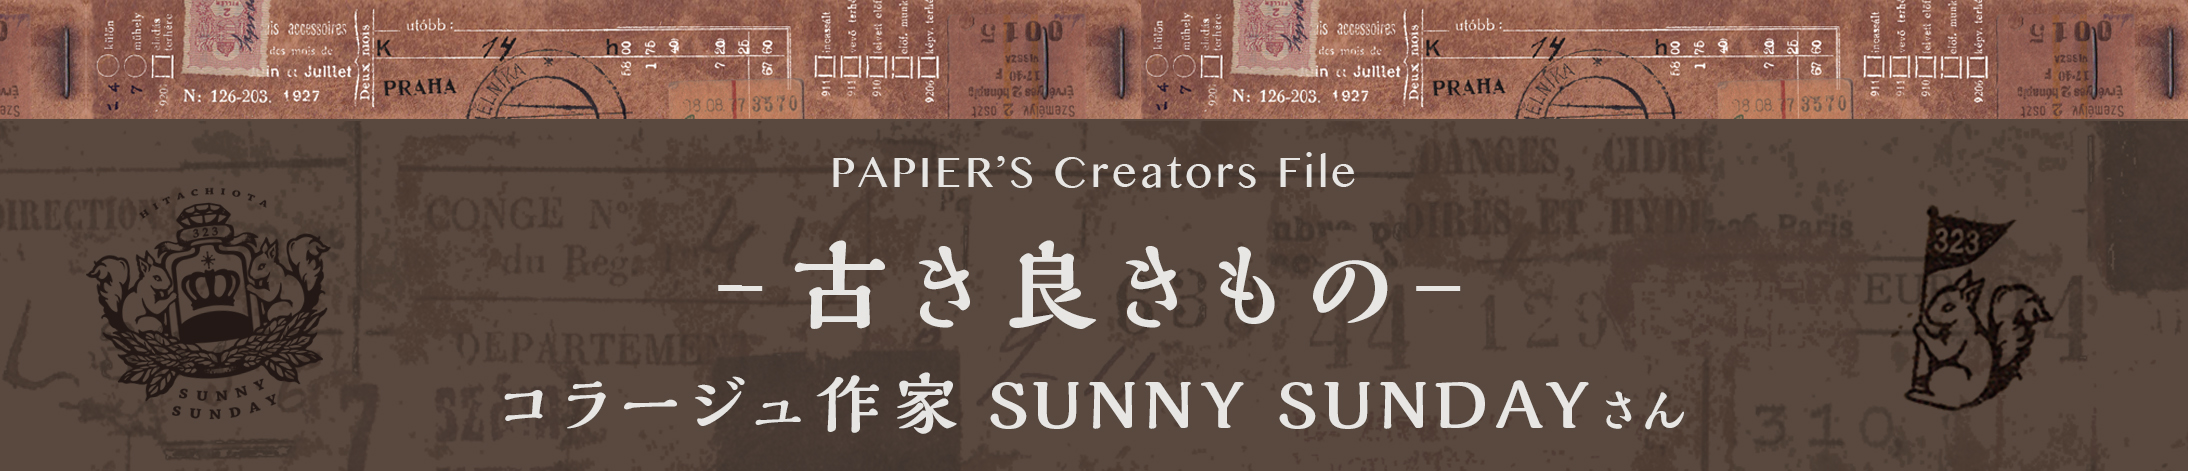 【PAPIER’s Creators File vol.4】SUNNY SUNDAYさん